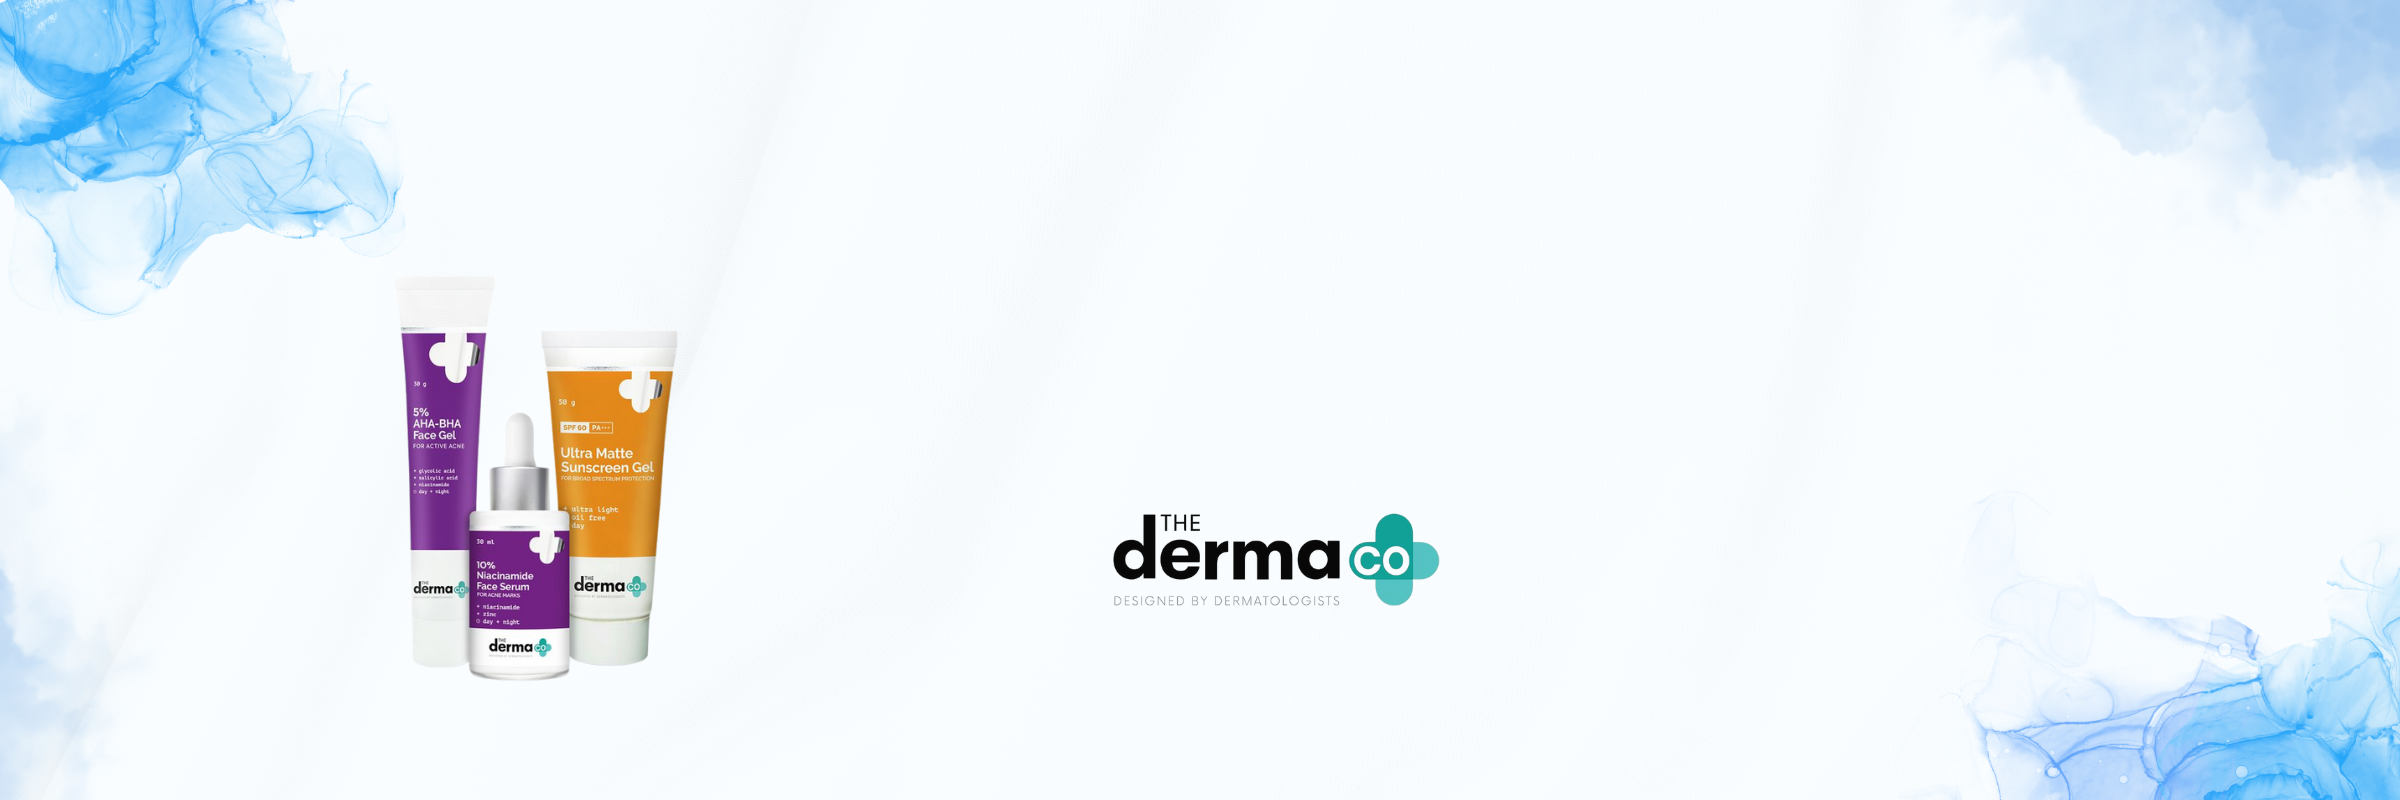 the derma co healthy skin kit nepal banner